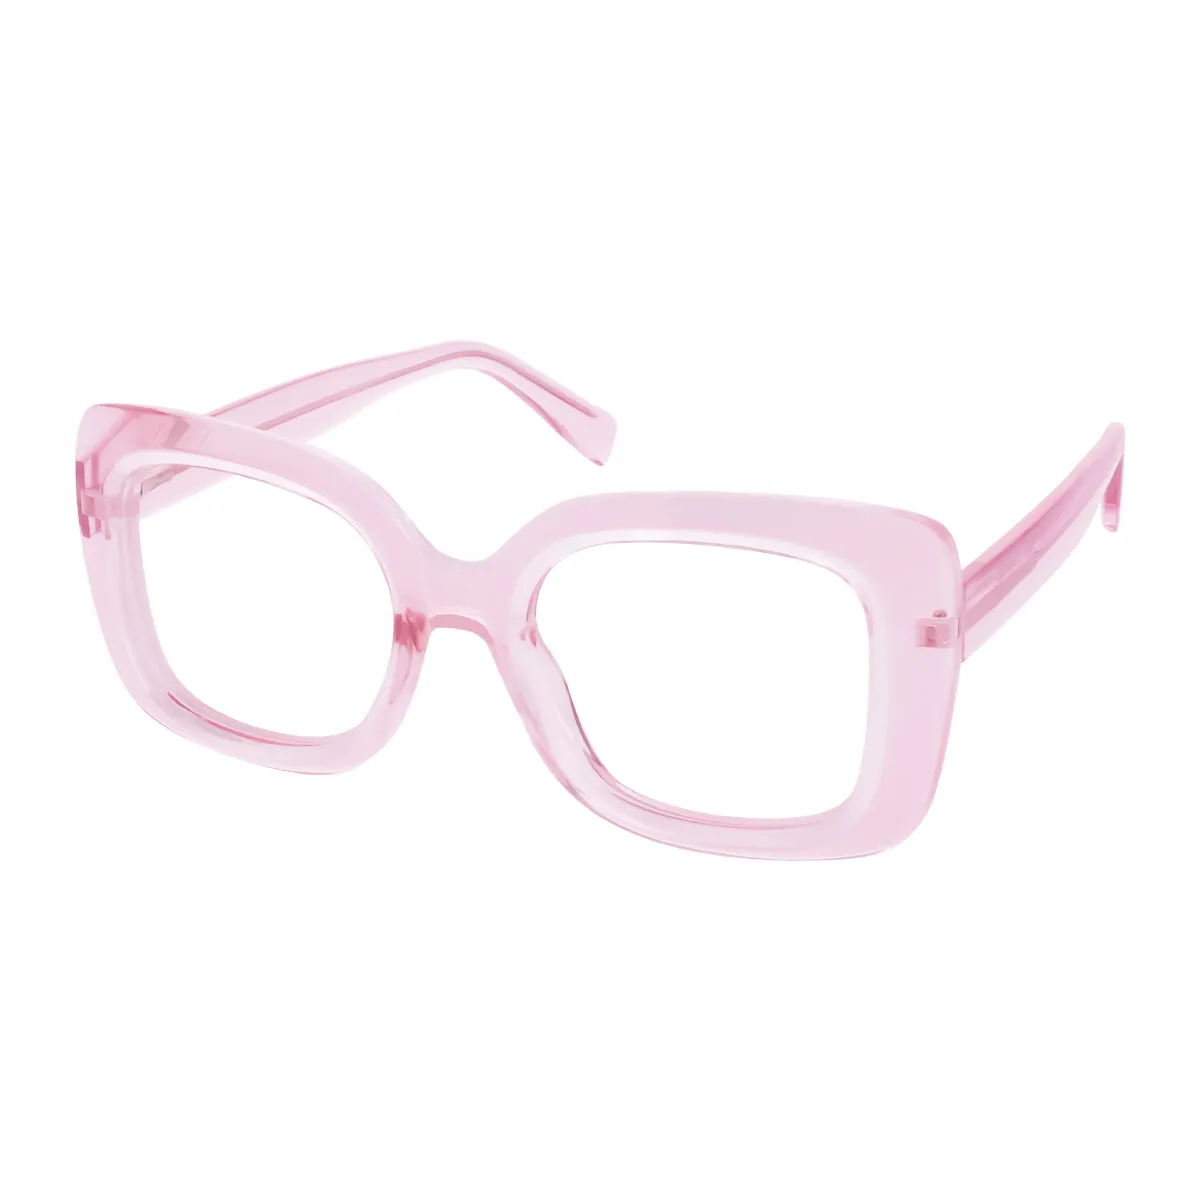 Madeline - Square Transparent Pink Glasses for Women